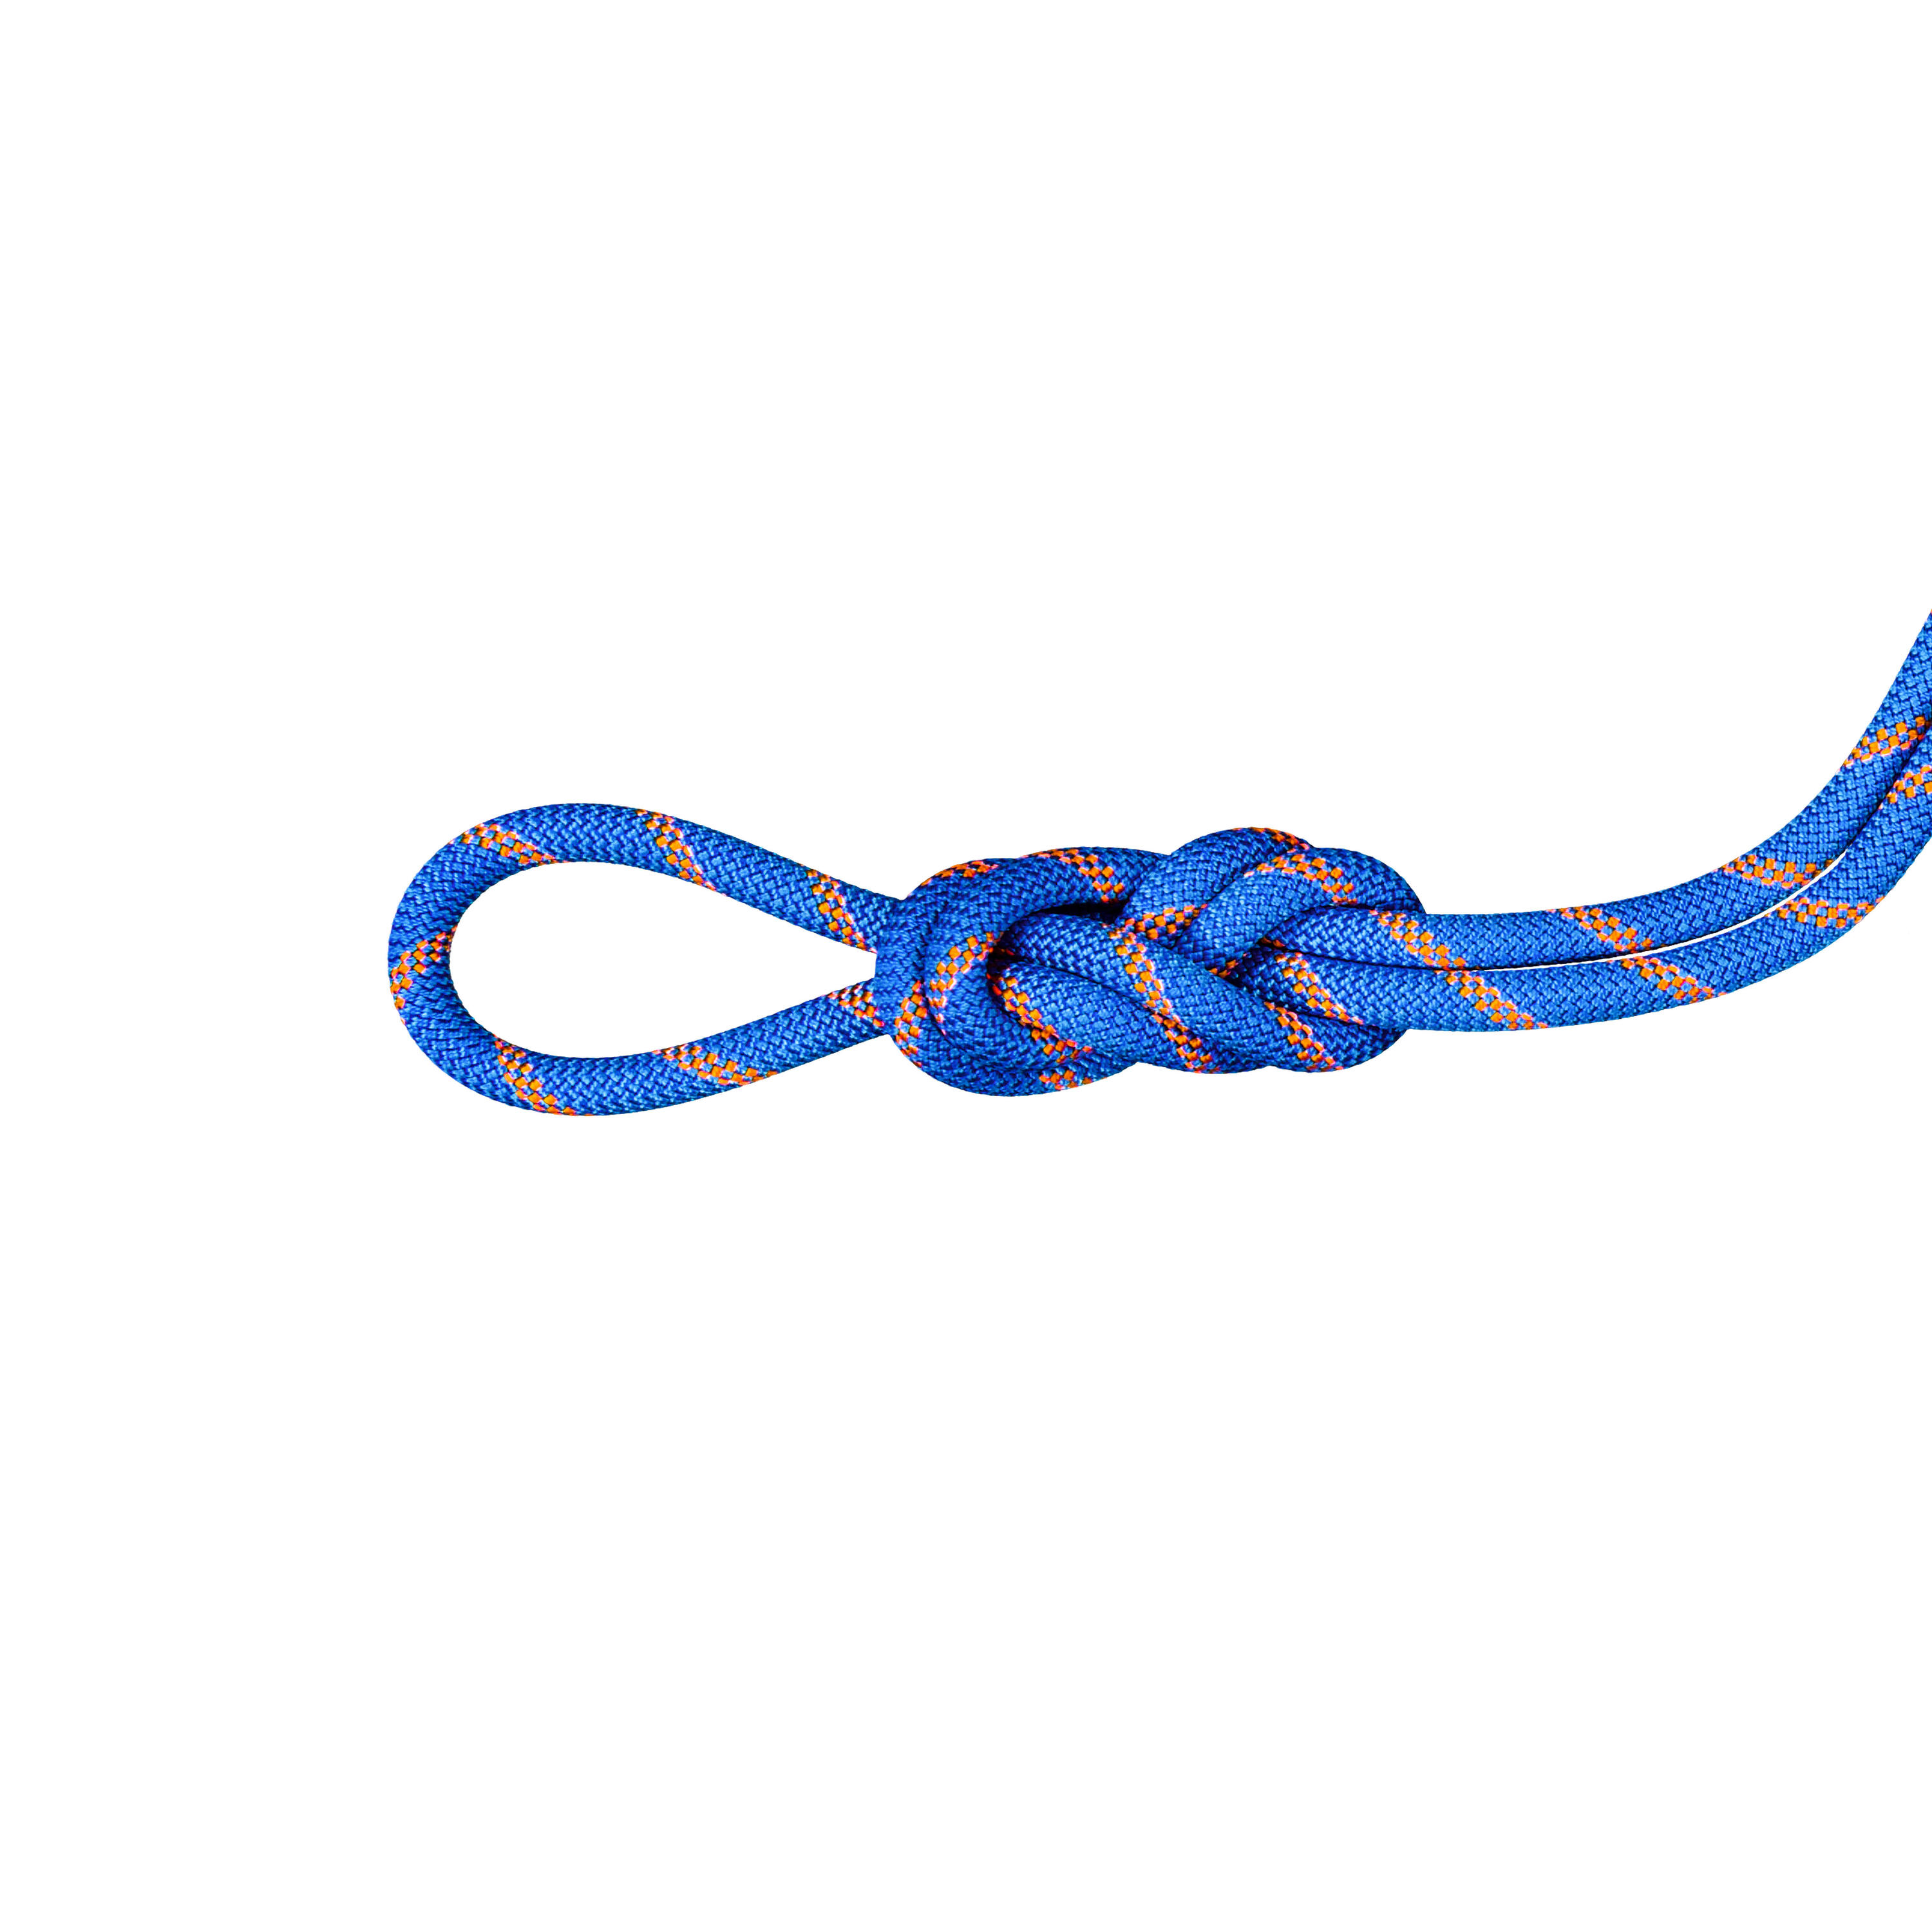 MAMMUT Alpine Sender Dry Triple-Rated Rope 9.0 mm x 60m - Blue